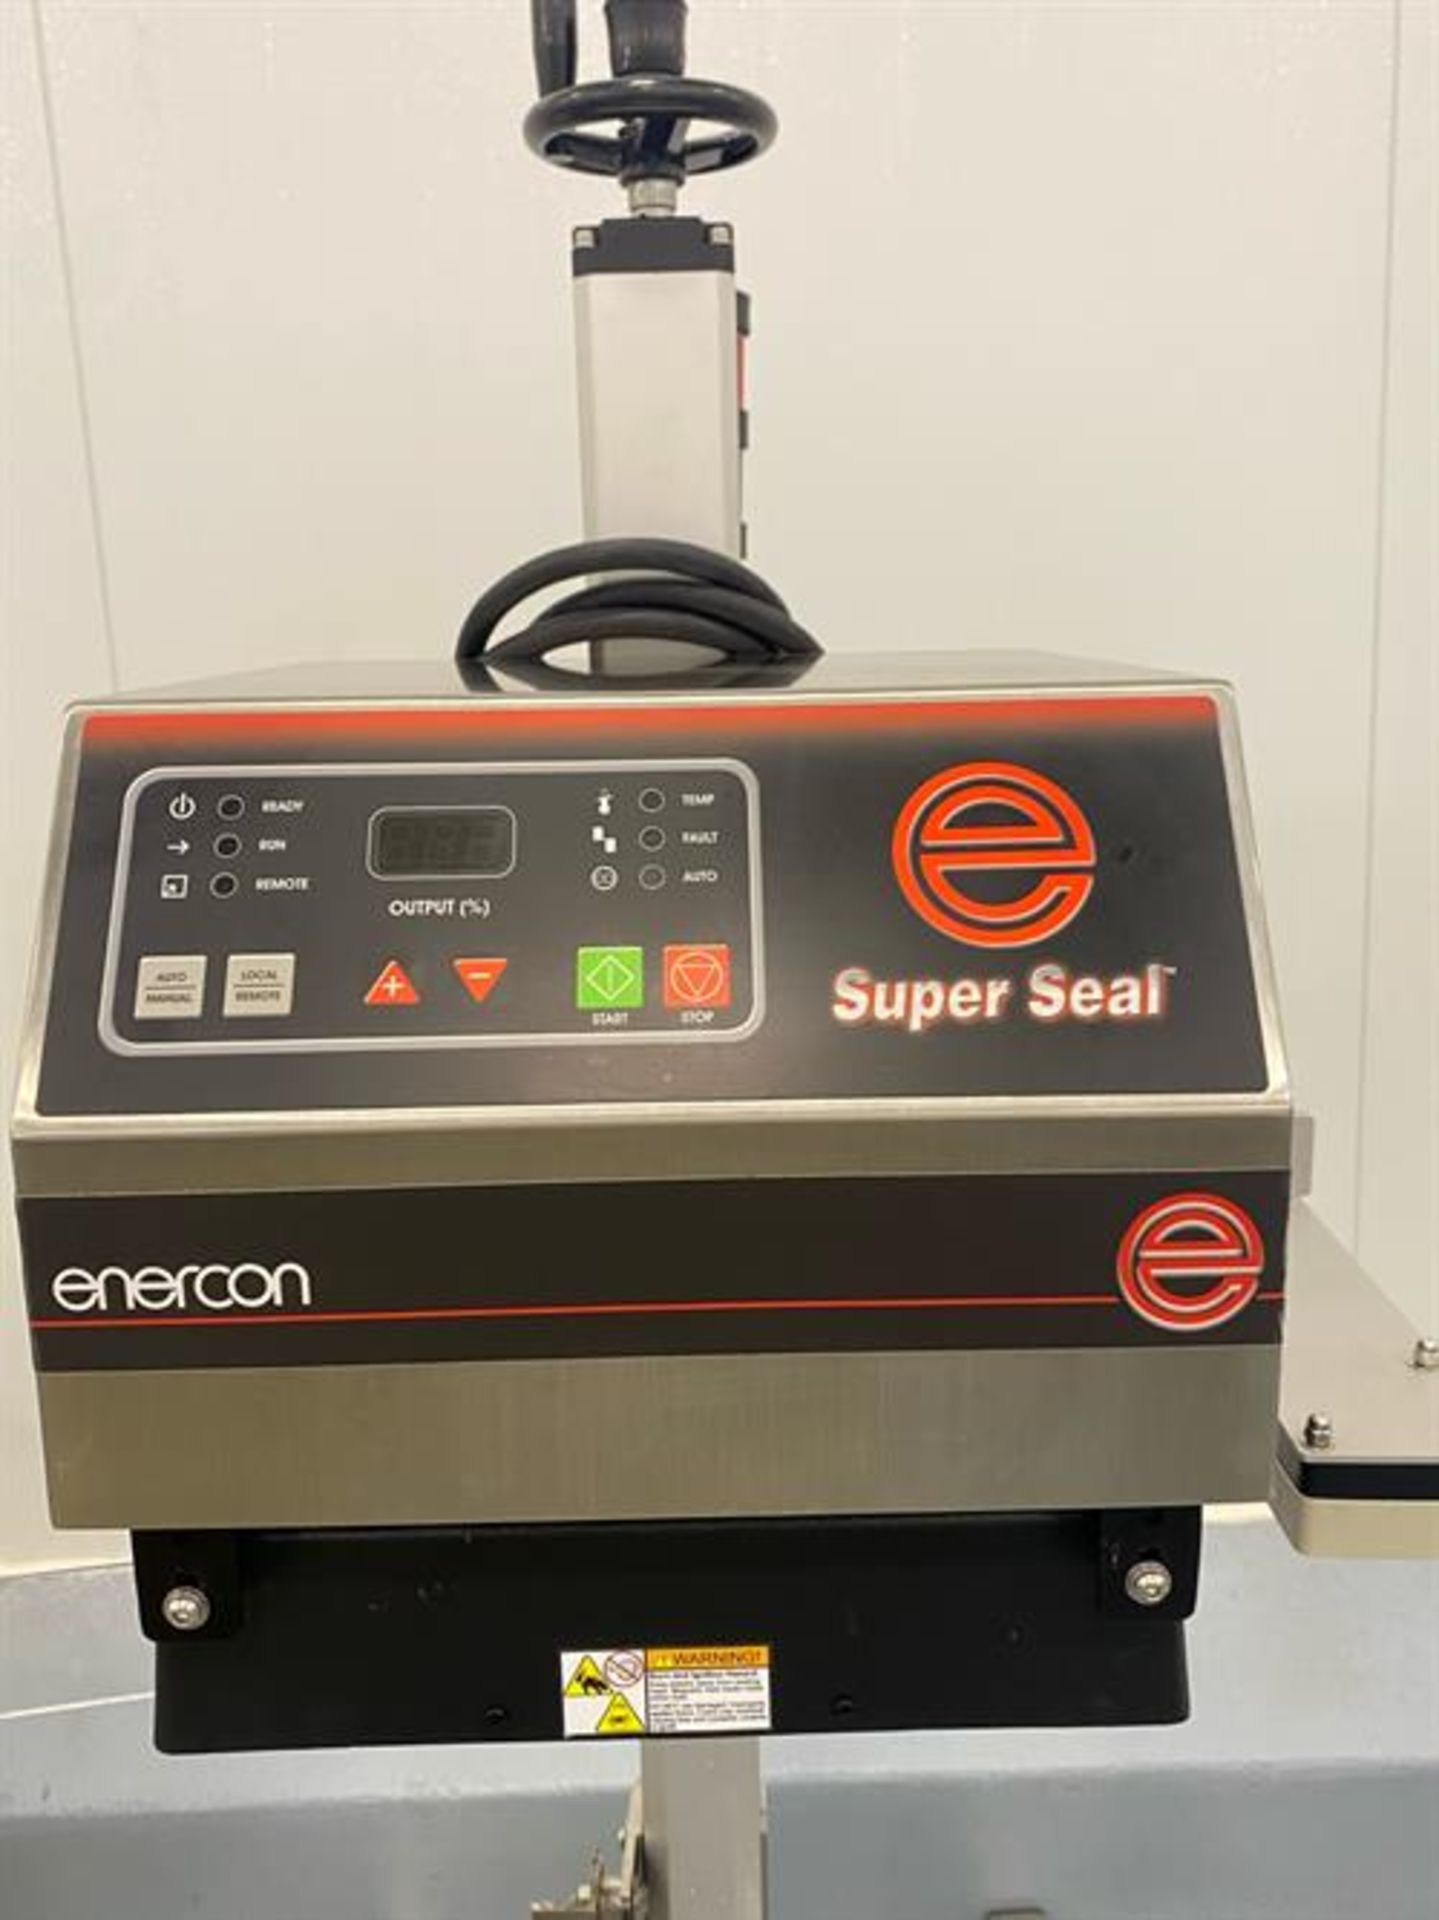 Enercon Super Seal 75 Induction Sealer - Model LM5022-295 - Sealing range: 53 - 120 mm - Serial - Image 2 of 11